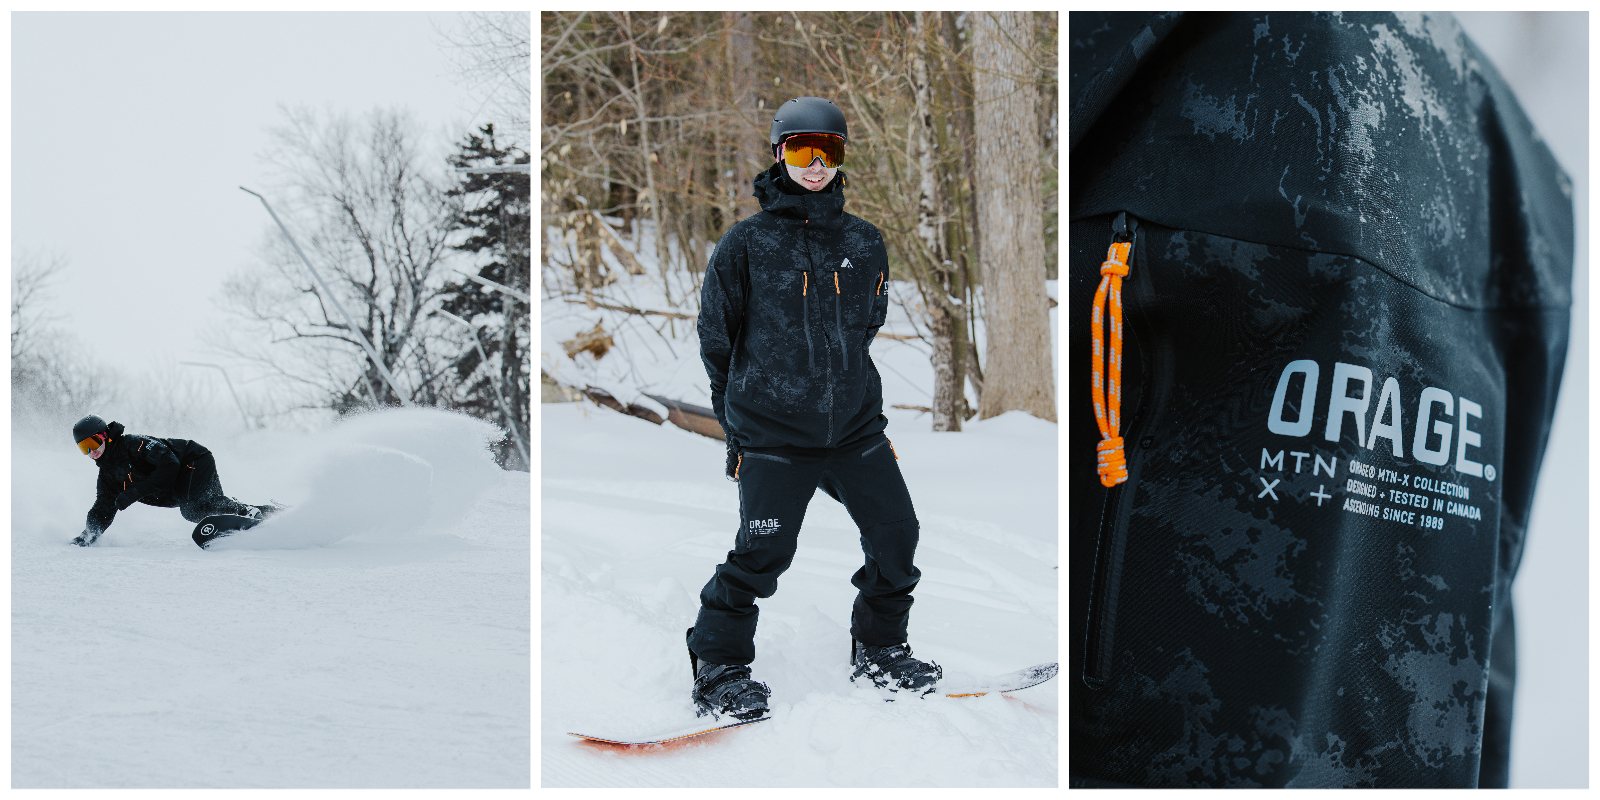 TSM, The Ski Monster, snow, snowboards, snowboarding, winter, snow, Ride, Ride snowboards, Sunapee, New Hampshire